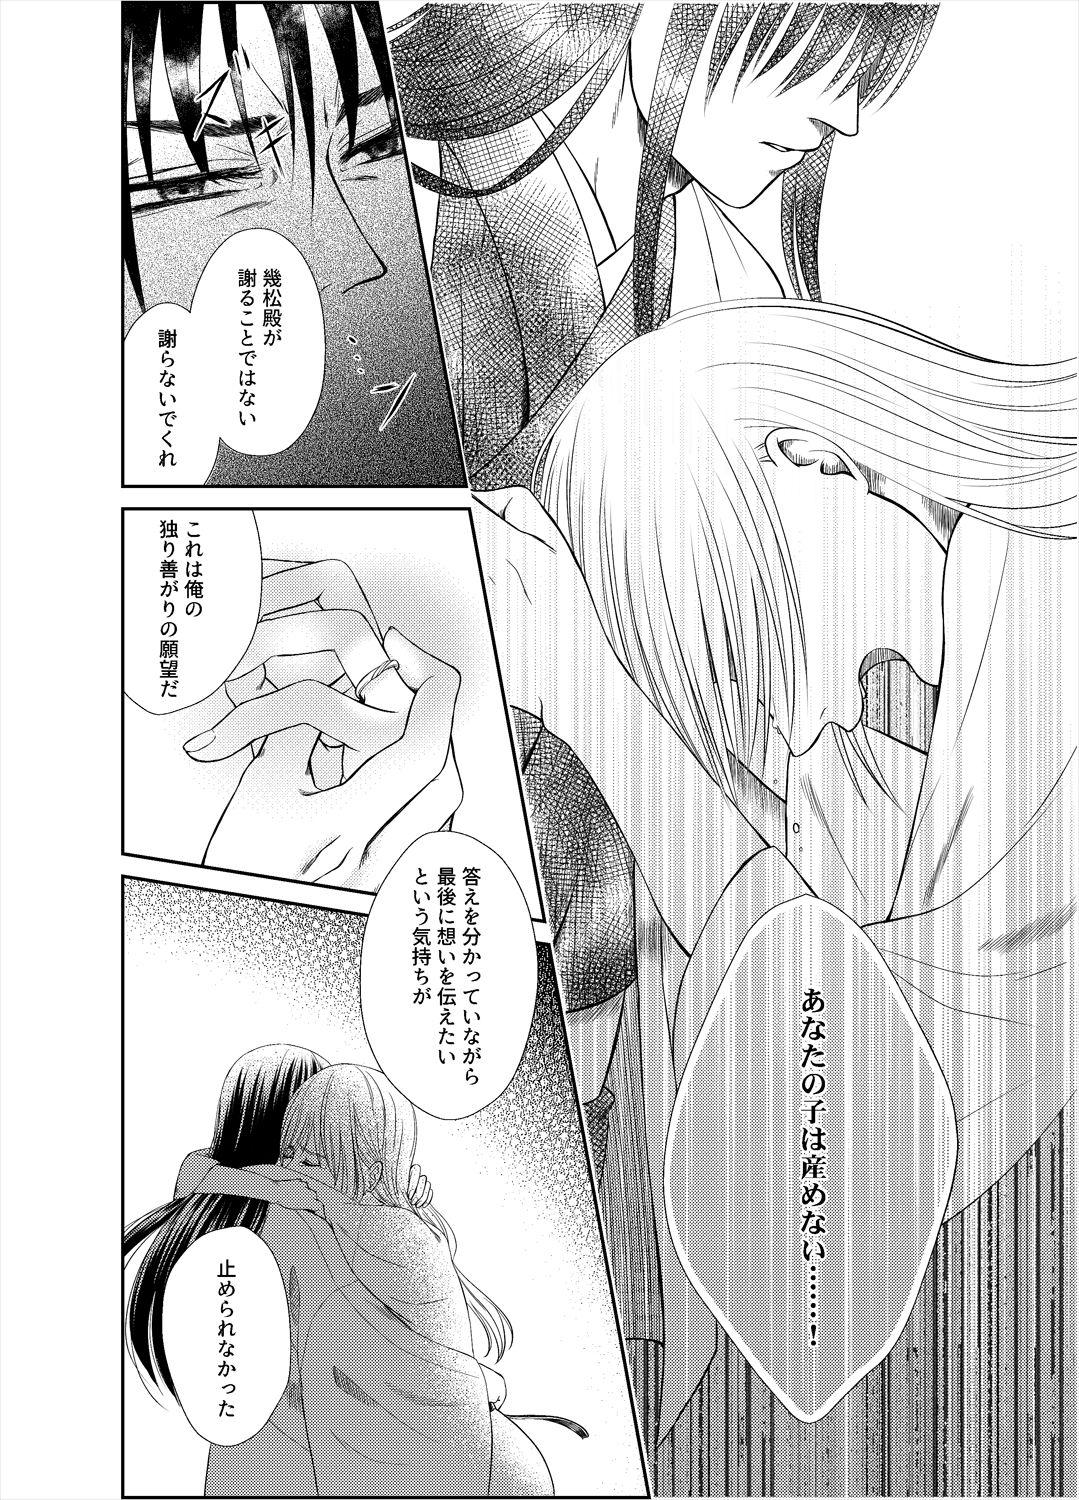 New Yonoya - Gintama Pretty - Page 9